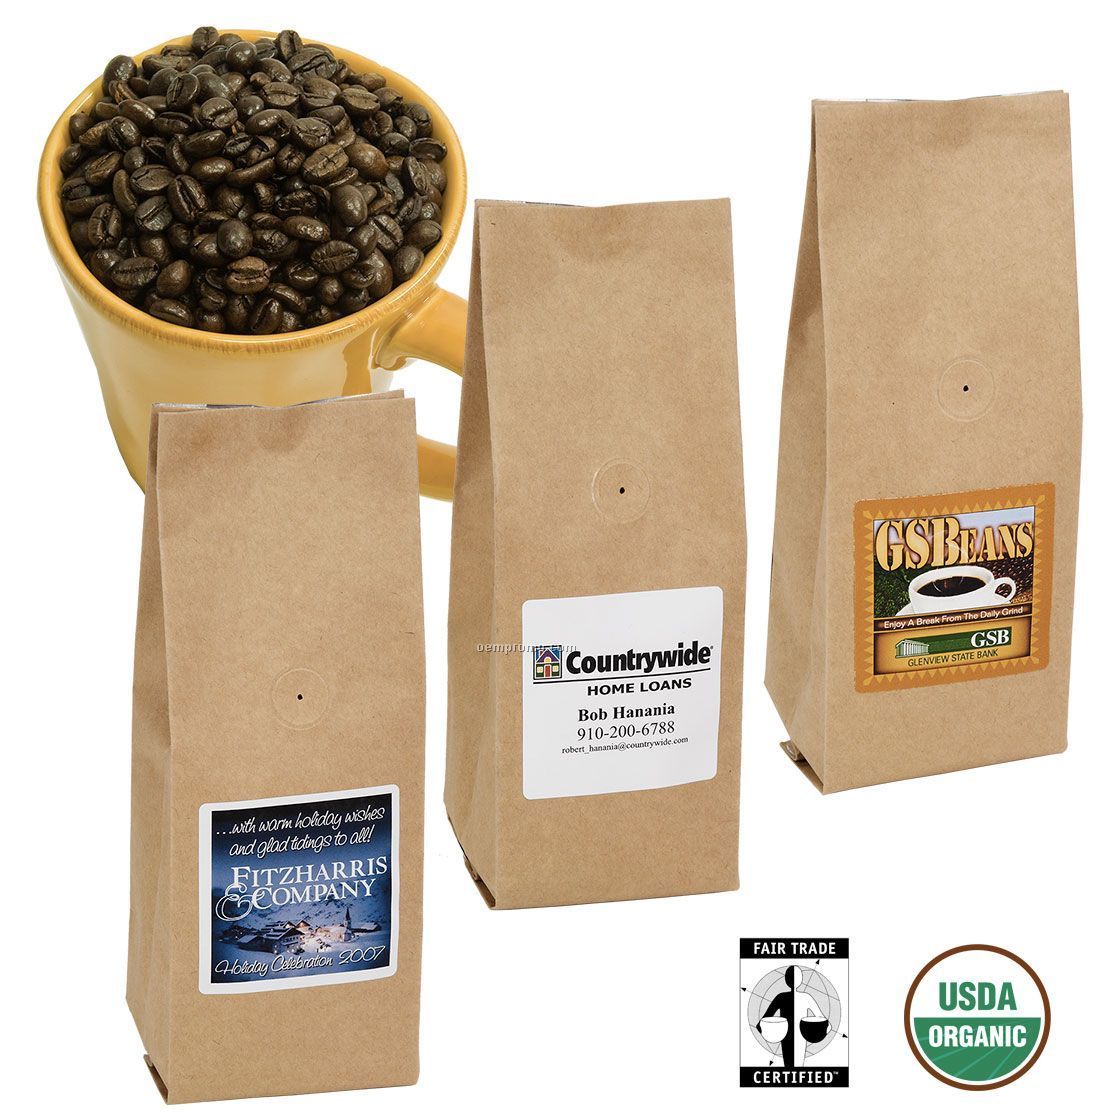 8 Oz. Organic Fair Trade Coffee (Printed Label)